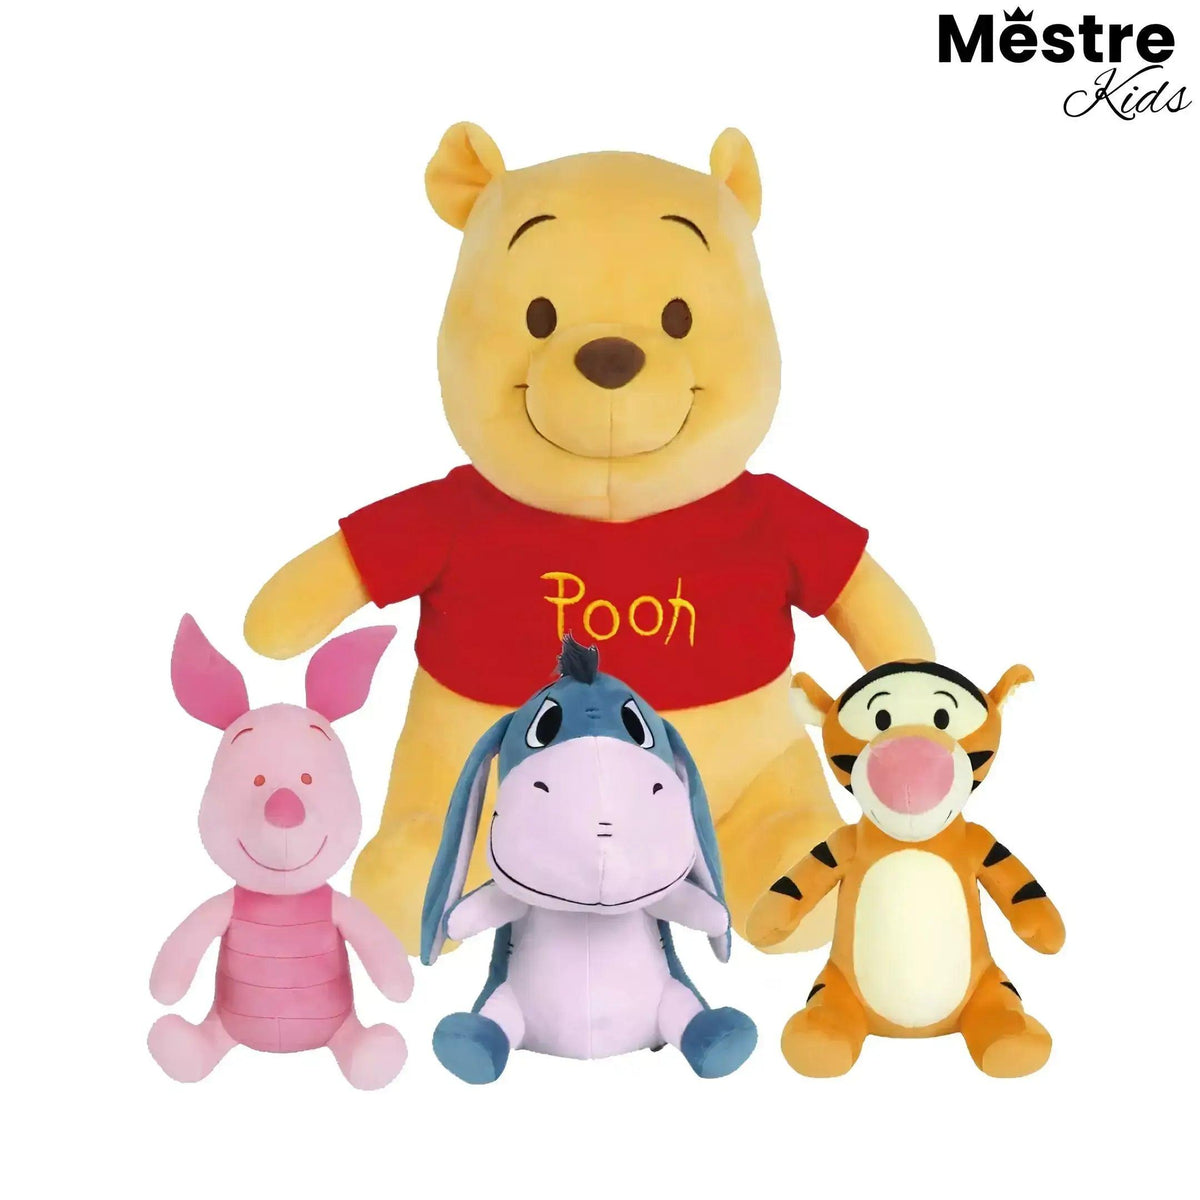 Disney - Pelúcia Pooh - Mestre Kids